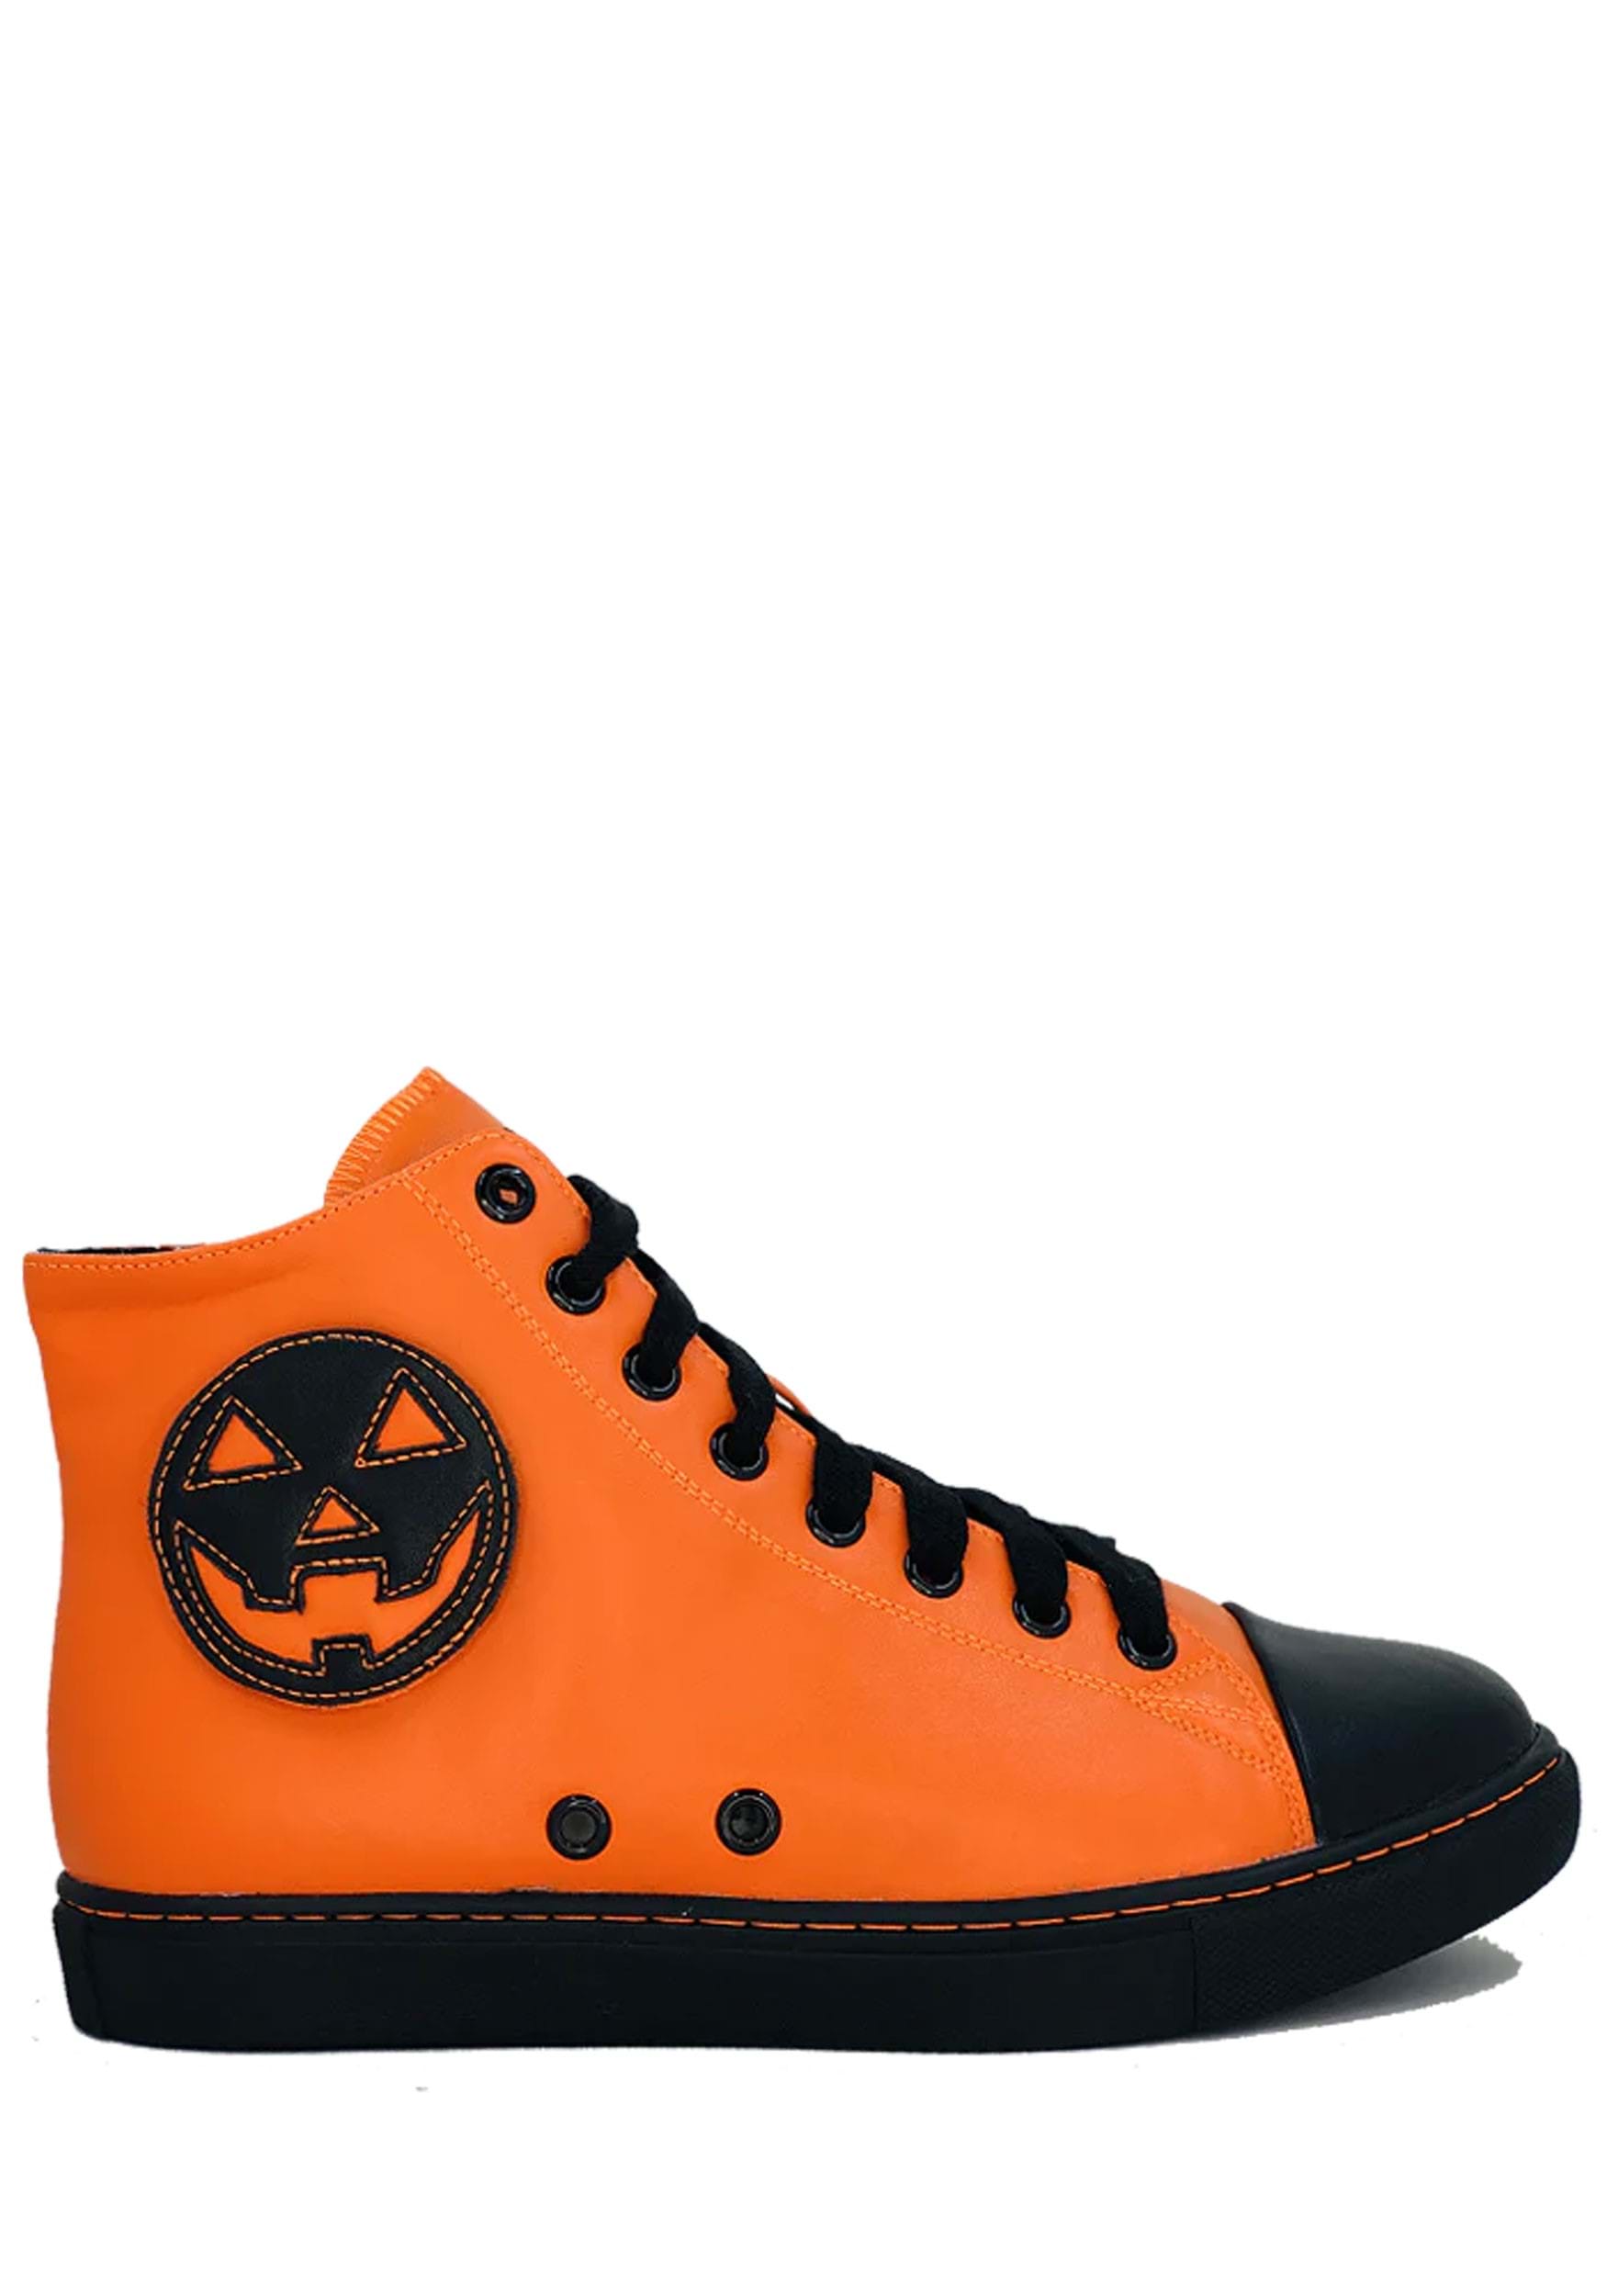 Image of Women's Orange Pumpkin Chelsea Jack High Top Sneaker | Halloween Footwear ID SVCHELSEAJACK-OR-6